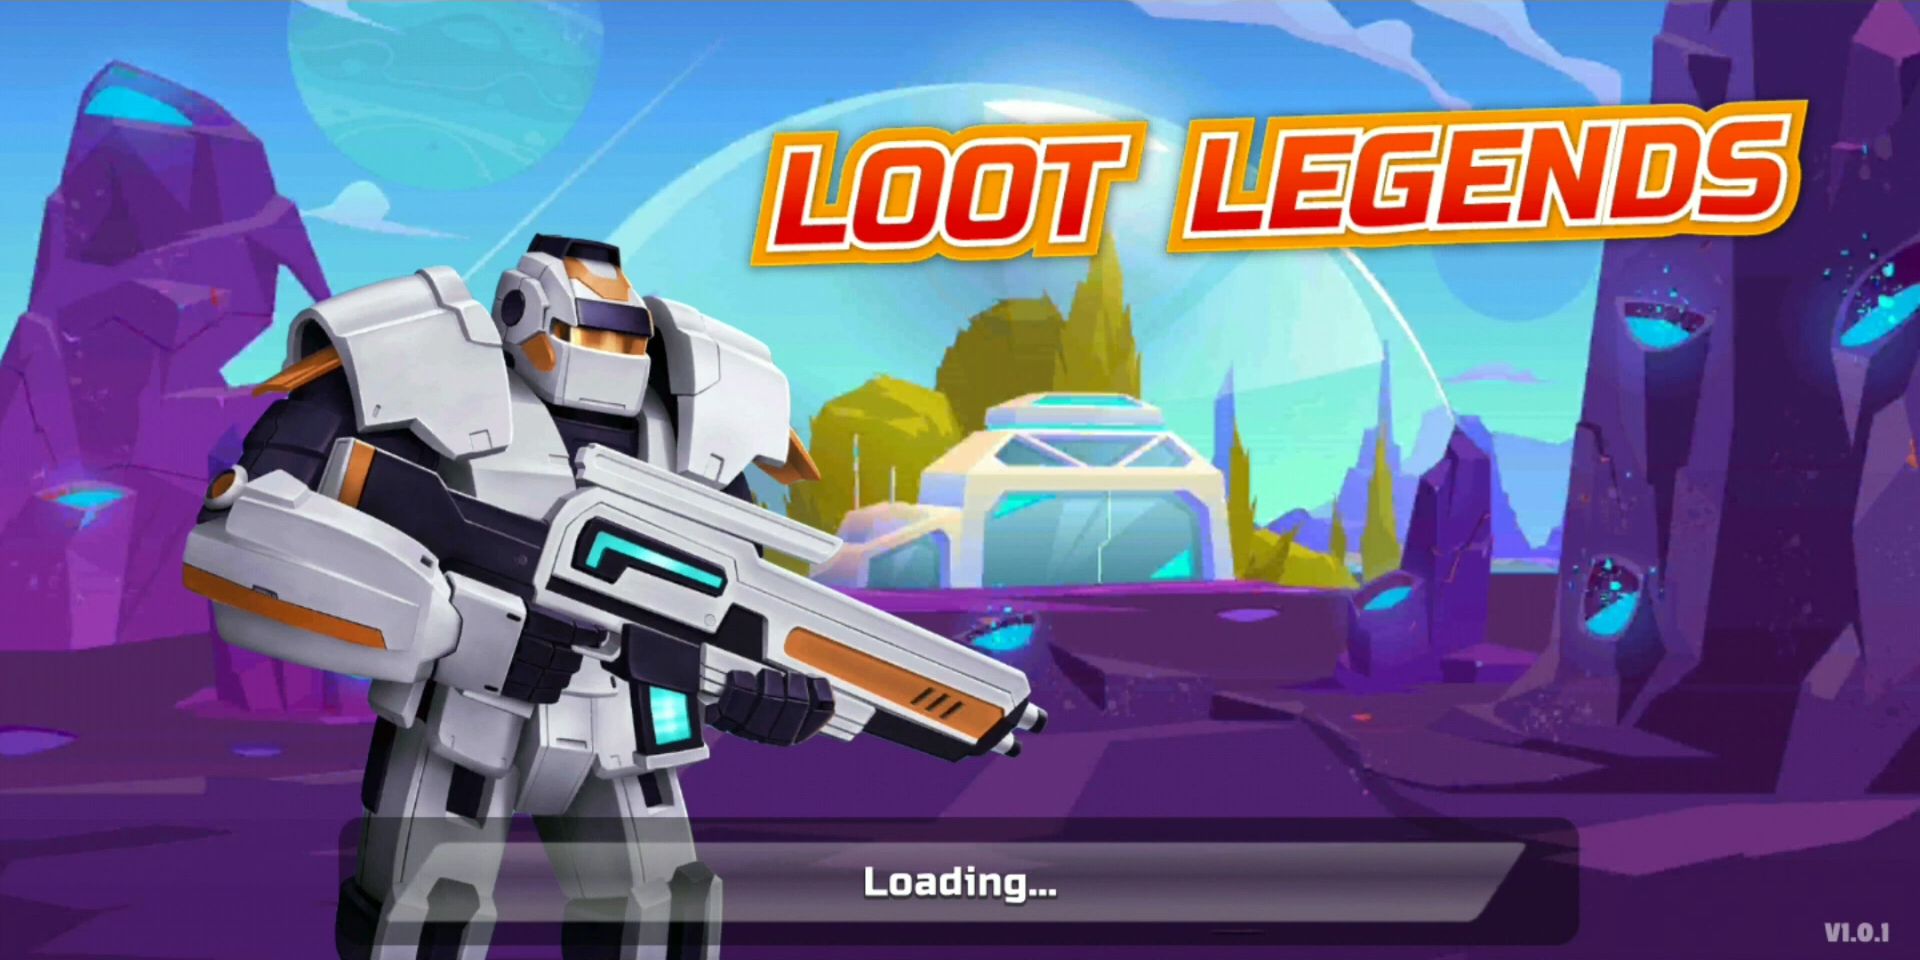 Scarica Loot Legends: Robots vs Aliens gratis per Android.